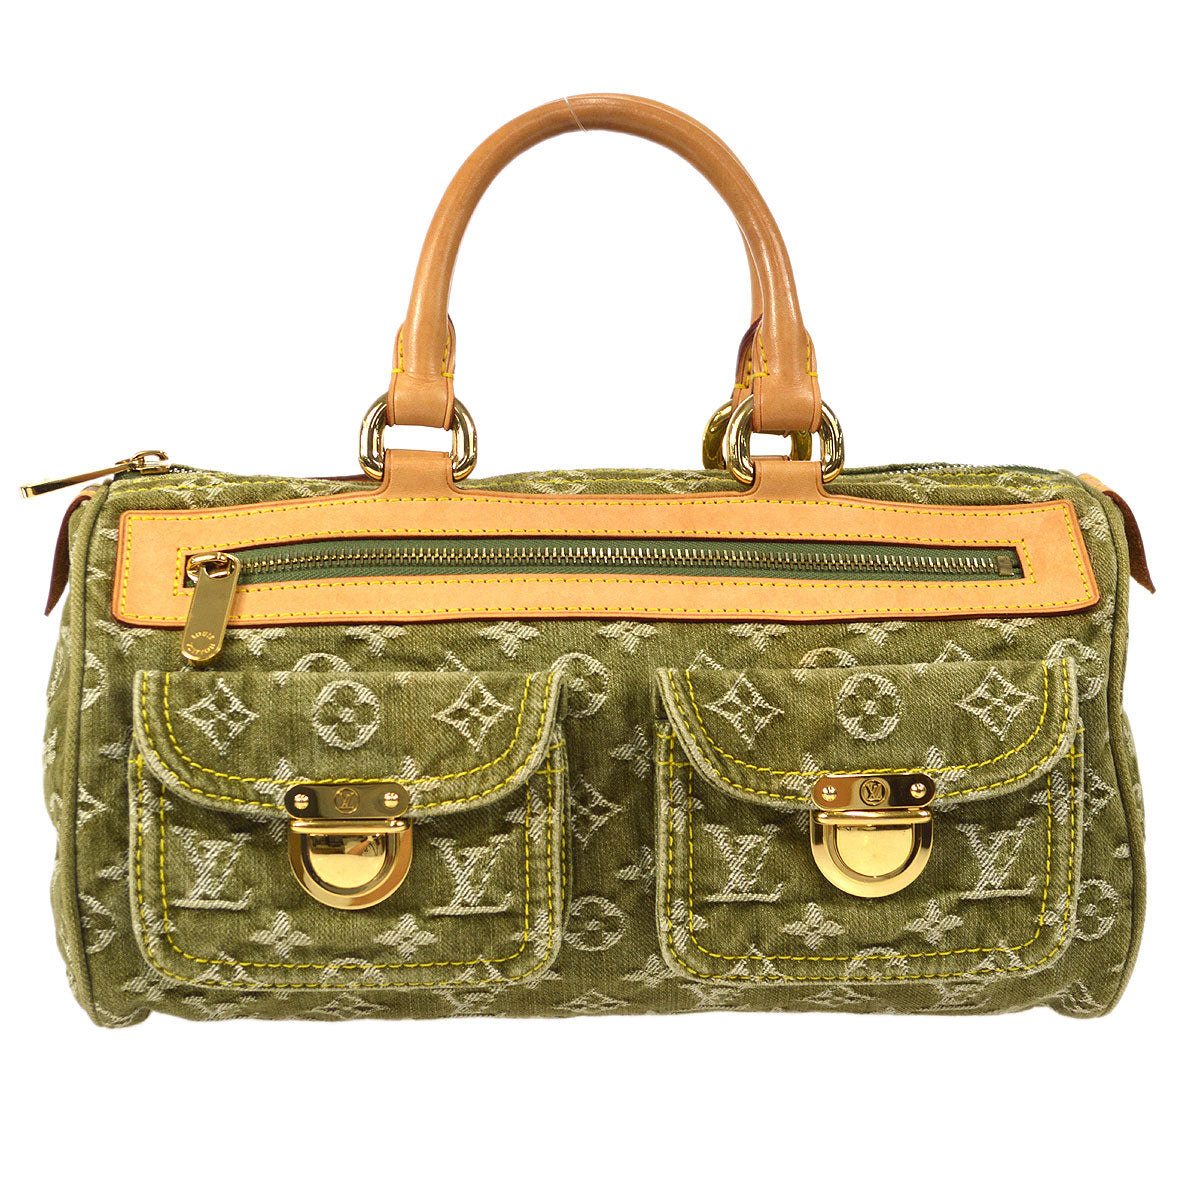 Louis Vuitton - Authenticated Speedy Handbag - Wool Green for Women, Very Good Condition